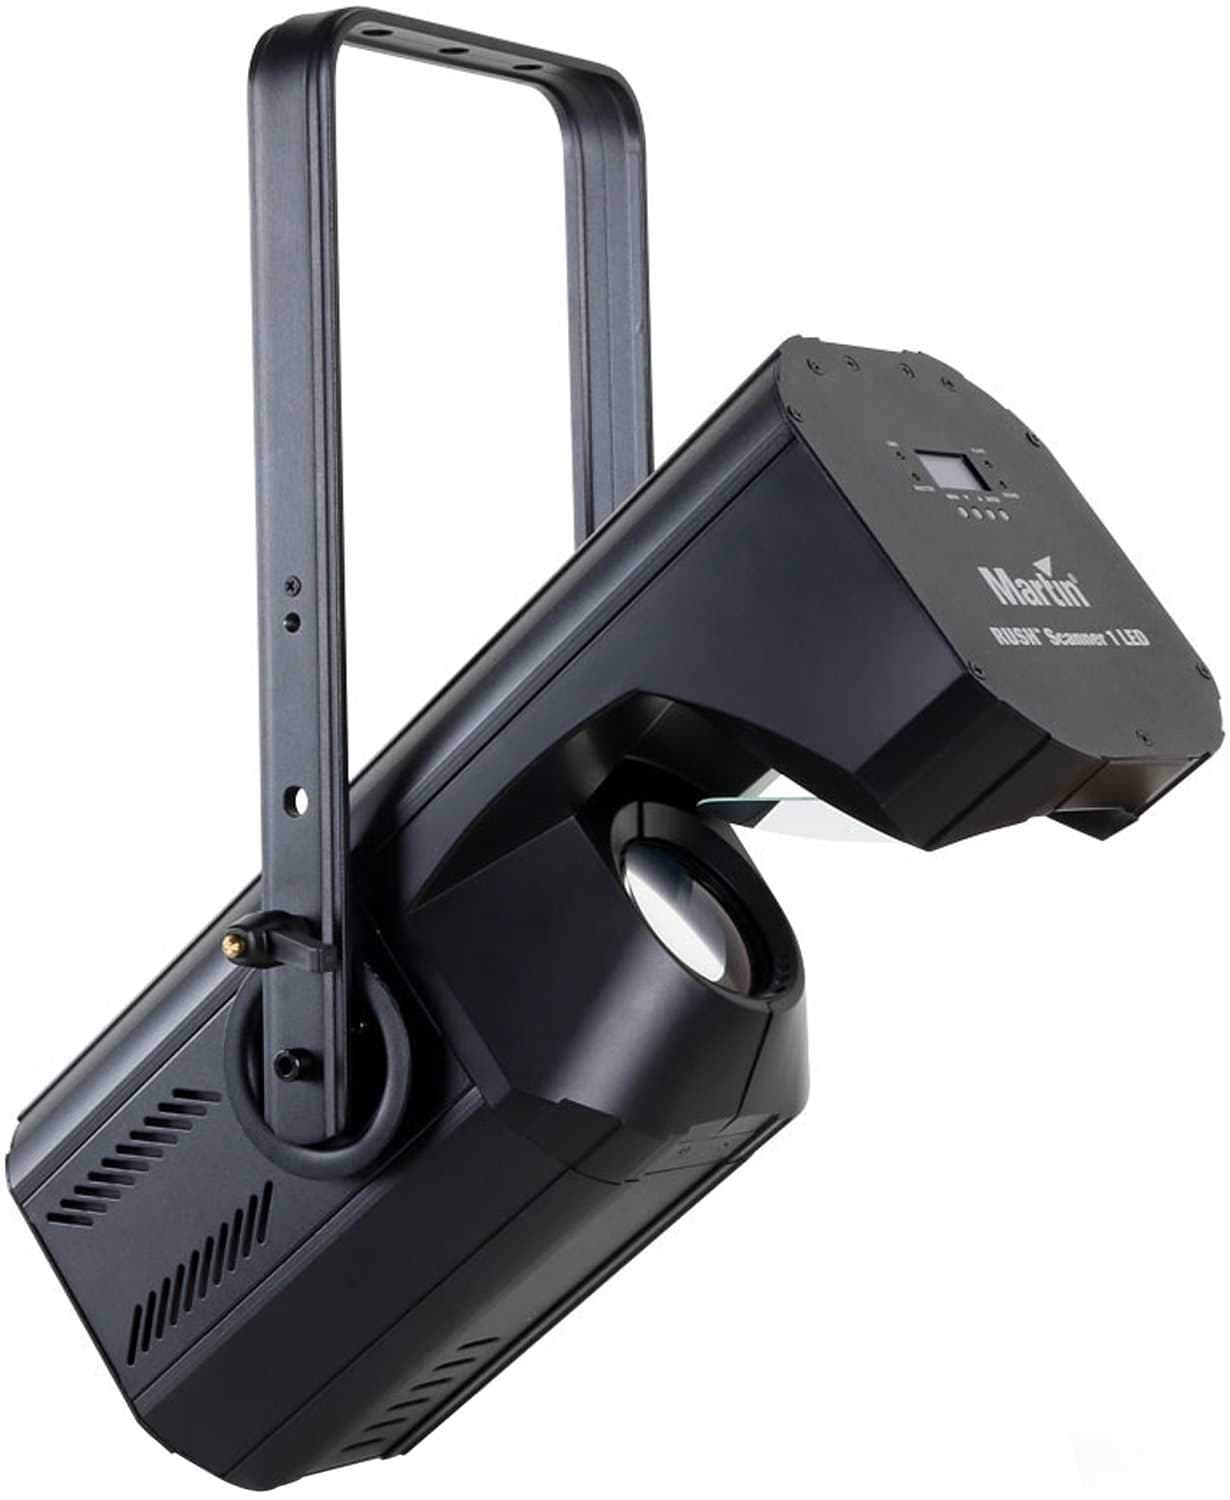 Martin RUSH Scanner 1 LED 90W Mirror Scanner Light - PSSL ProSound and Stage Lighting